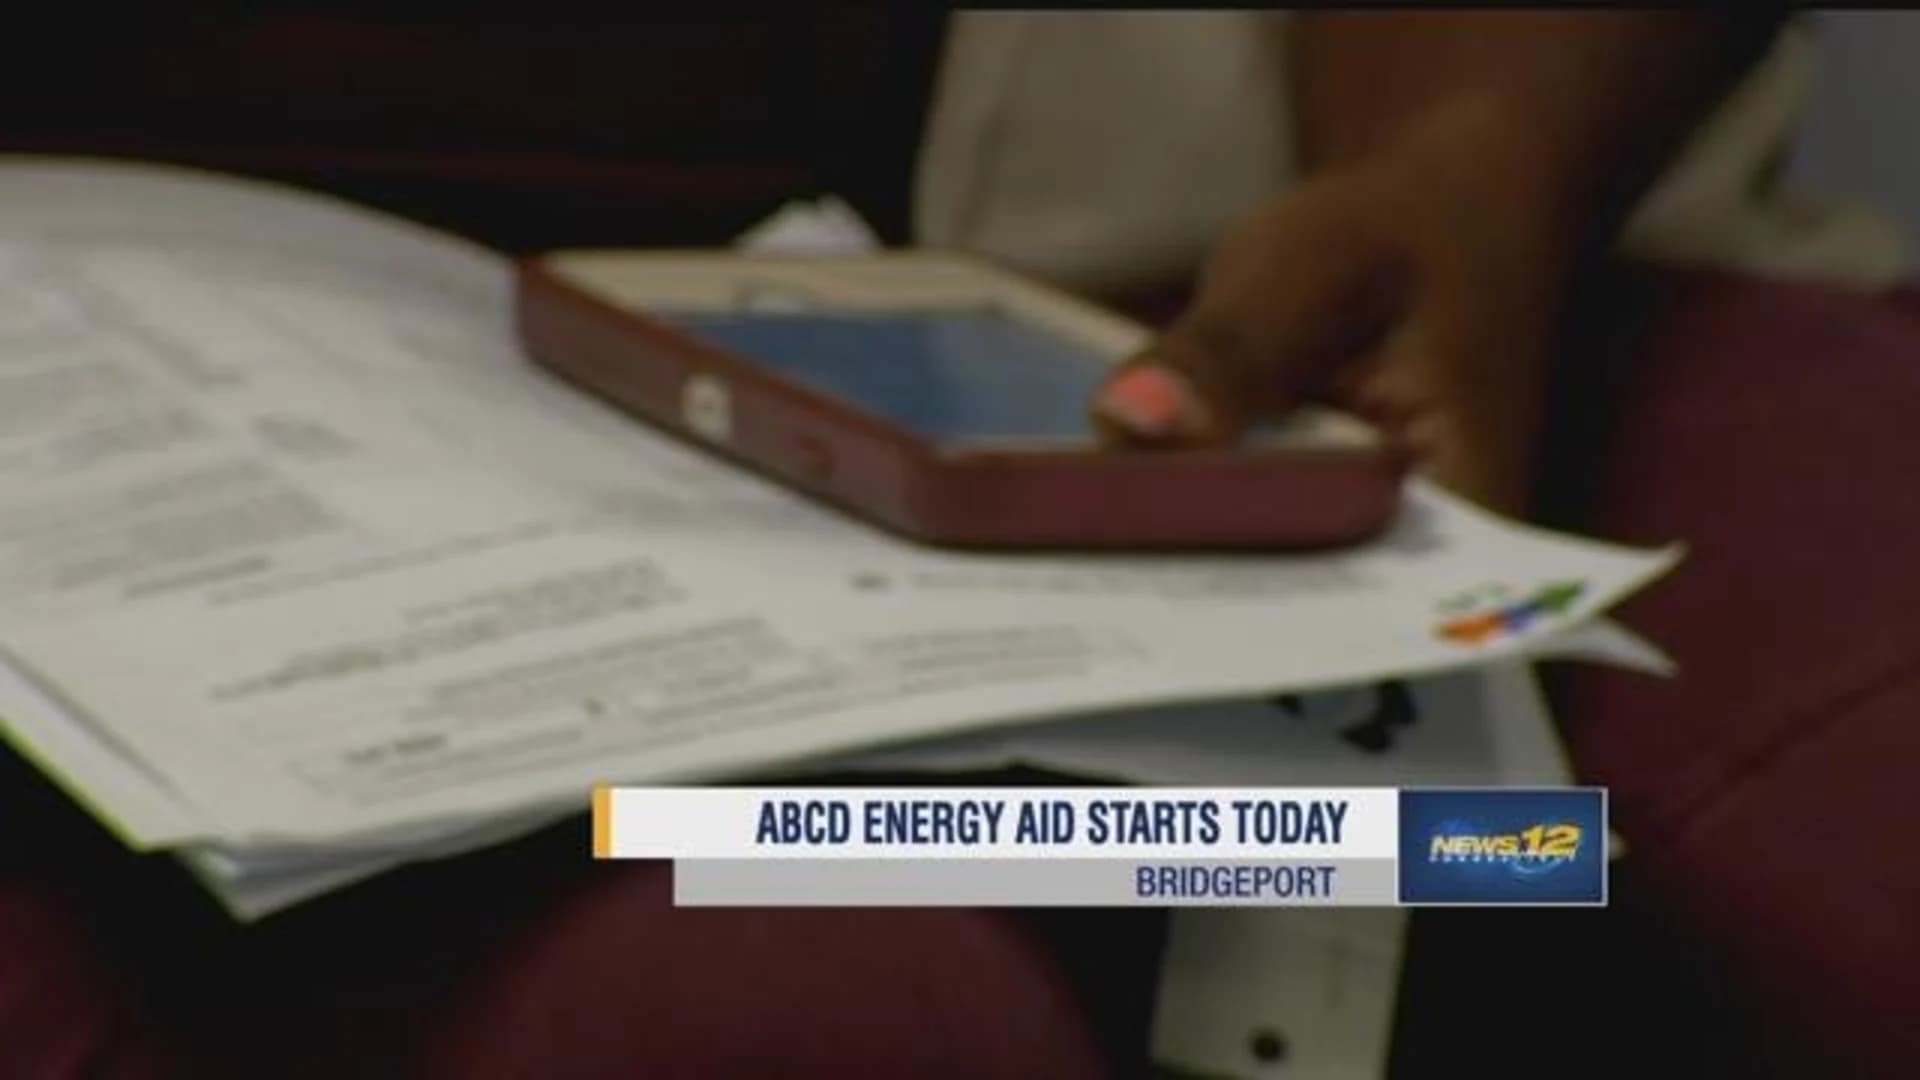 Applicants file for energy assistance program in Bridgeport, Norwalk